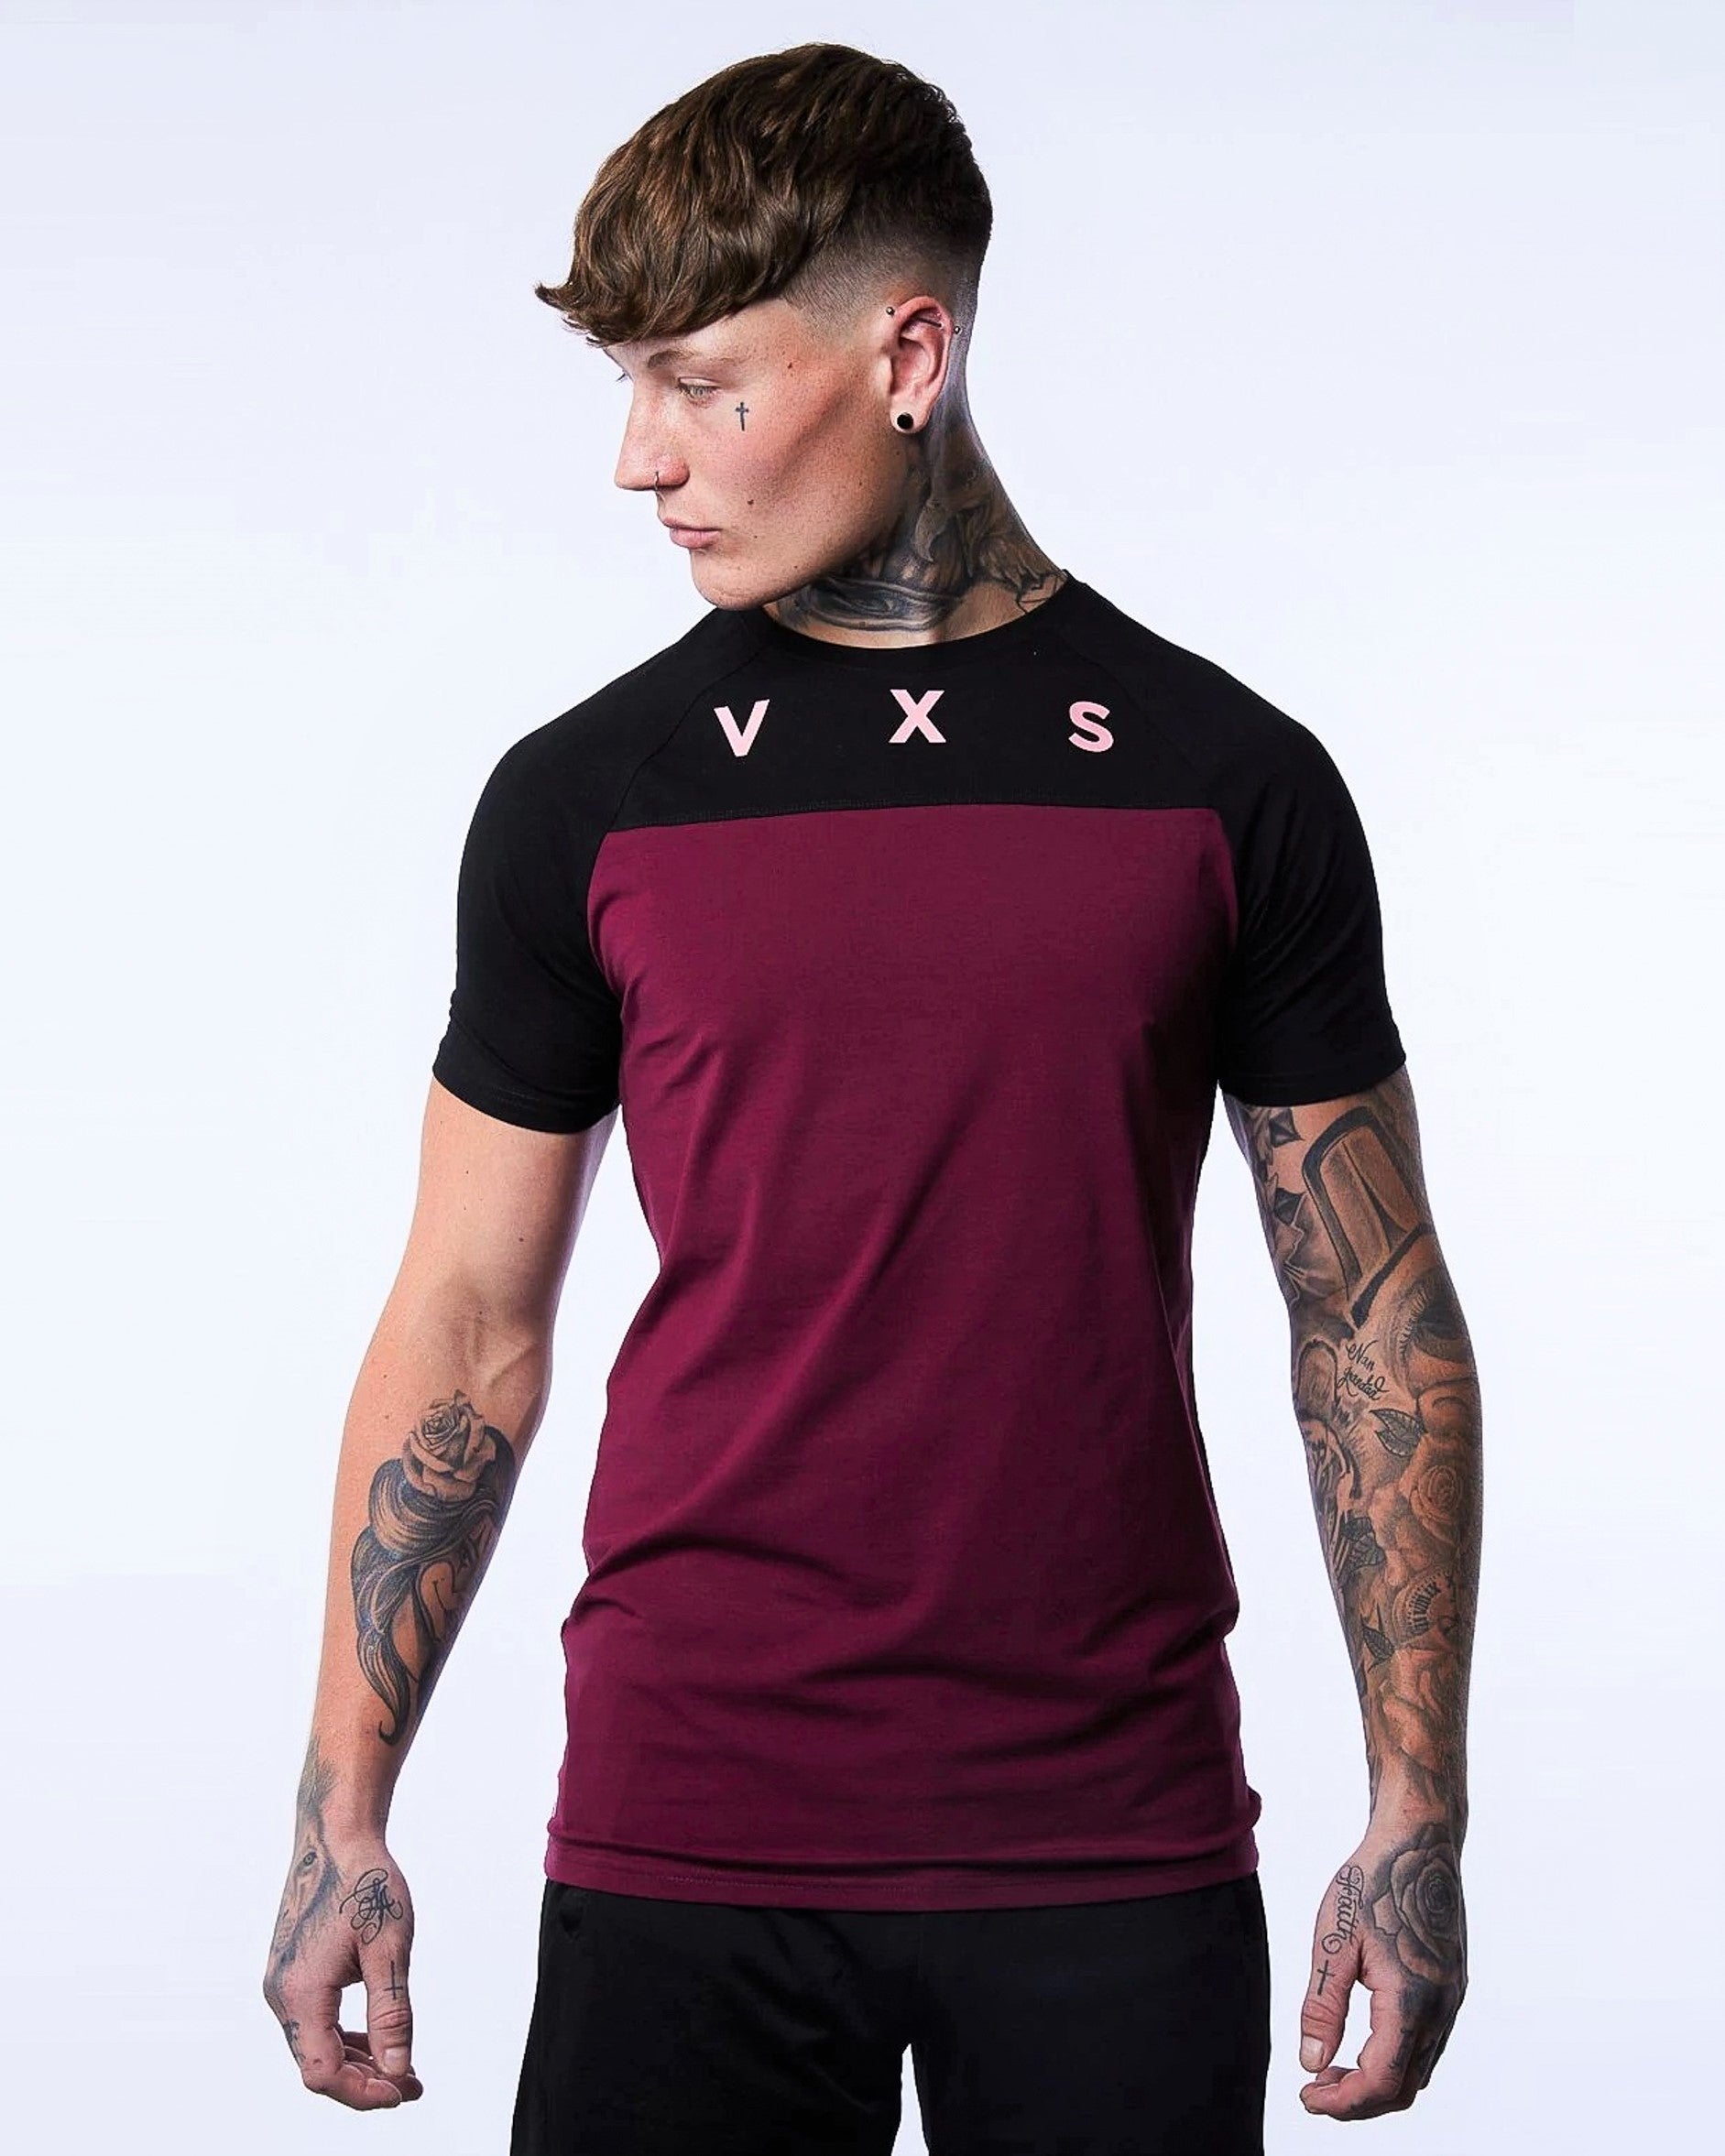 Aces T-Shirt [Black/Burgundy] - VXS GYM WEAR